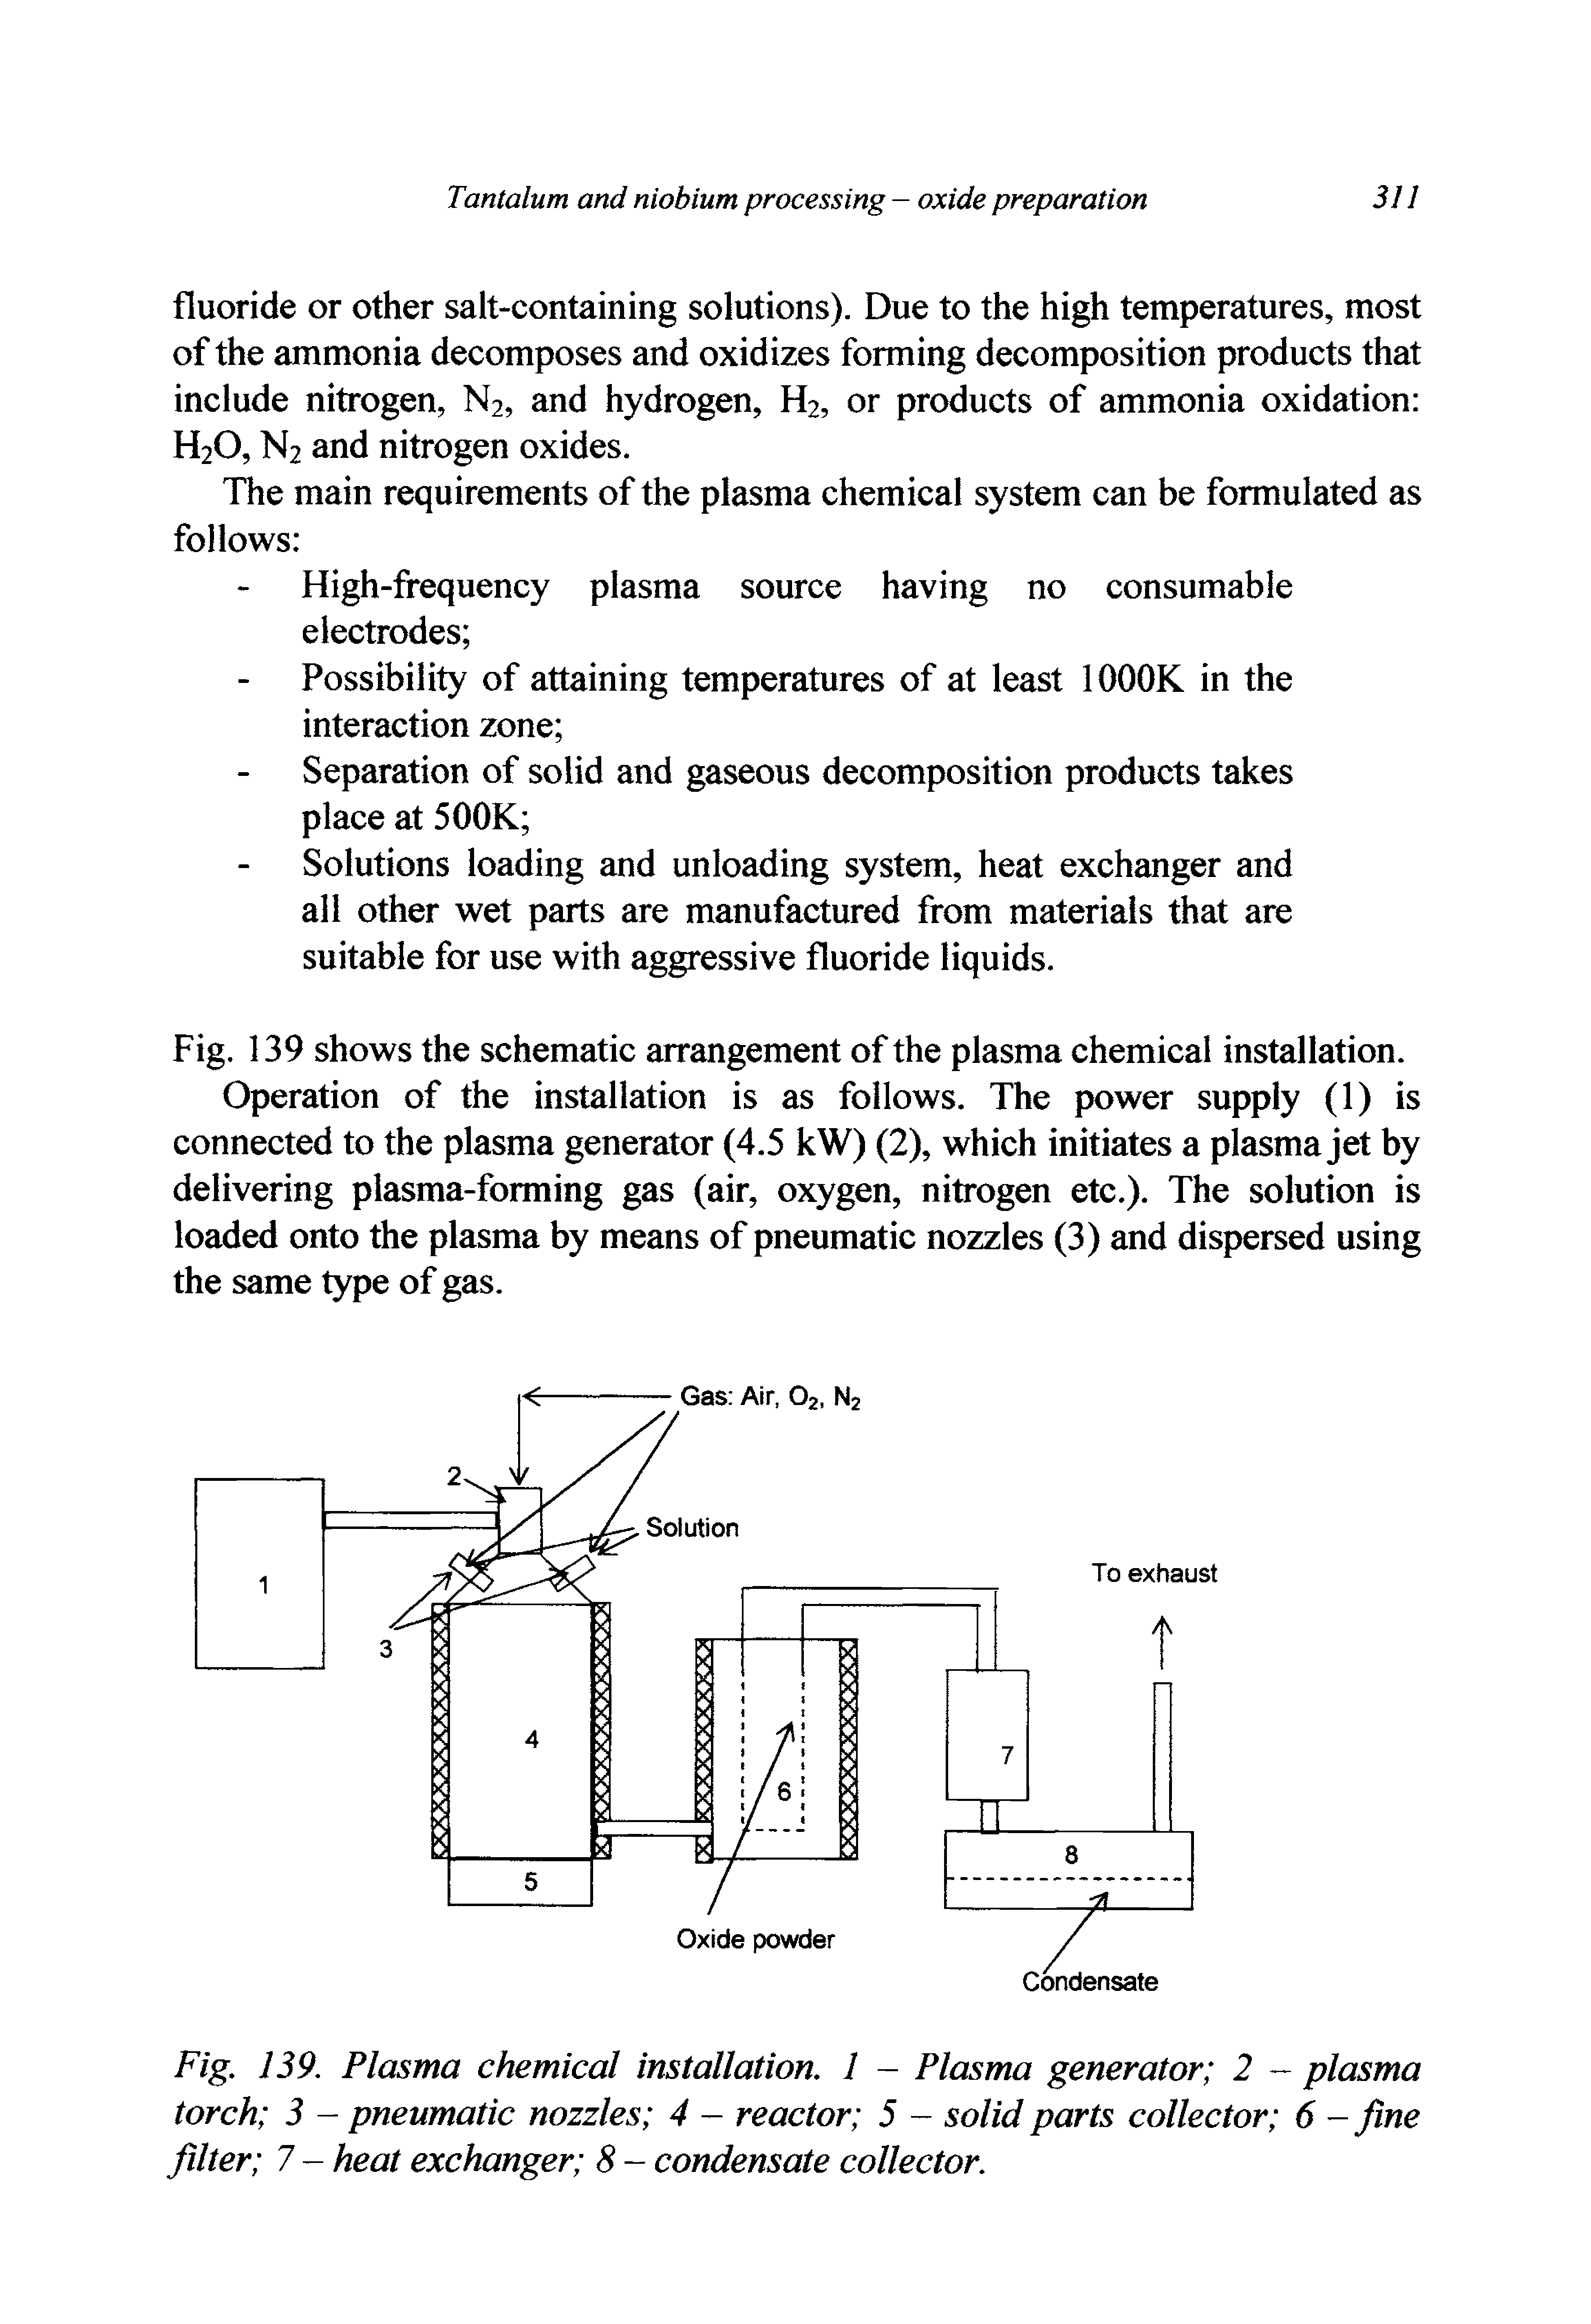 Fig. 139. Plasma chemical installation. 1 - Plasma generator 2 — plasma torch 3 - pneumatic nozzles 4 — reactor 5 - solid parts collector 6 — fine filter 7 - heat exchanger 8 - condensate collector.